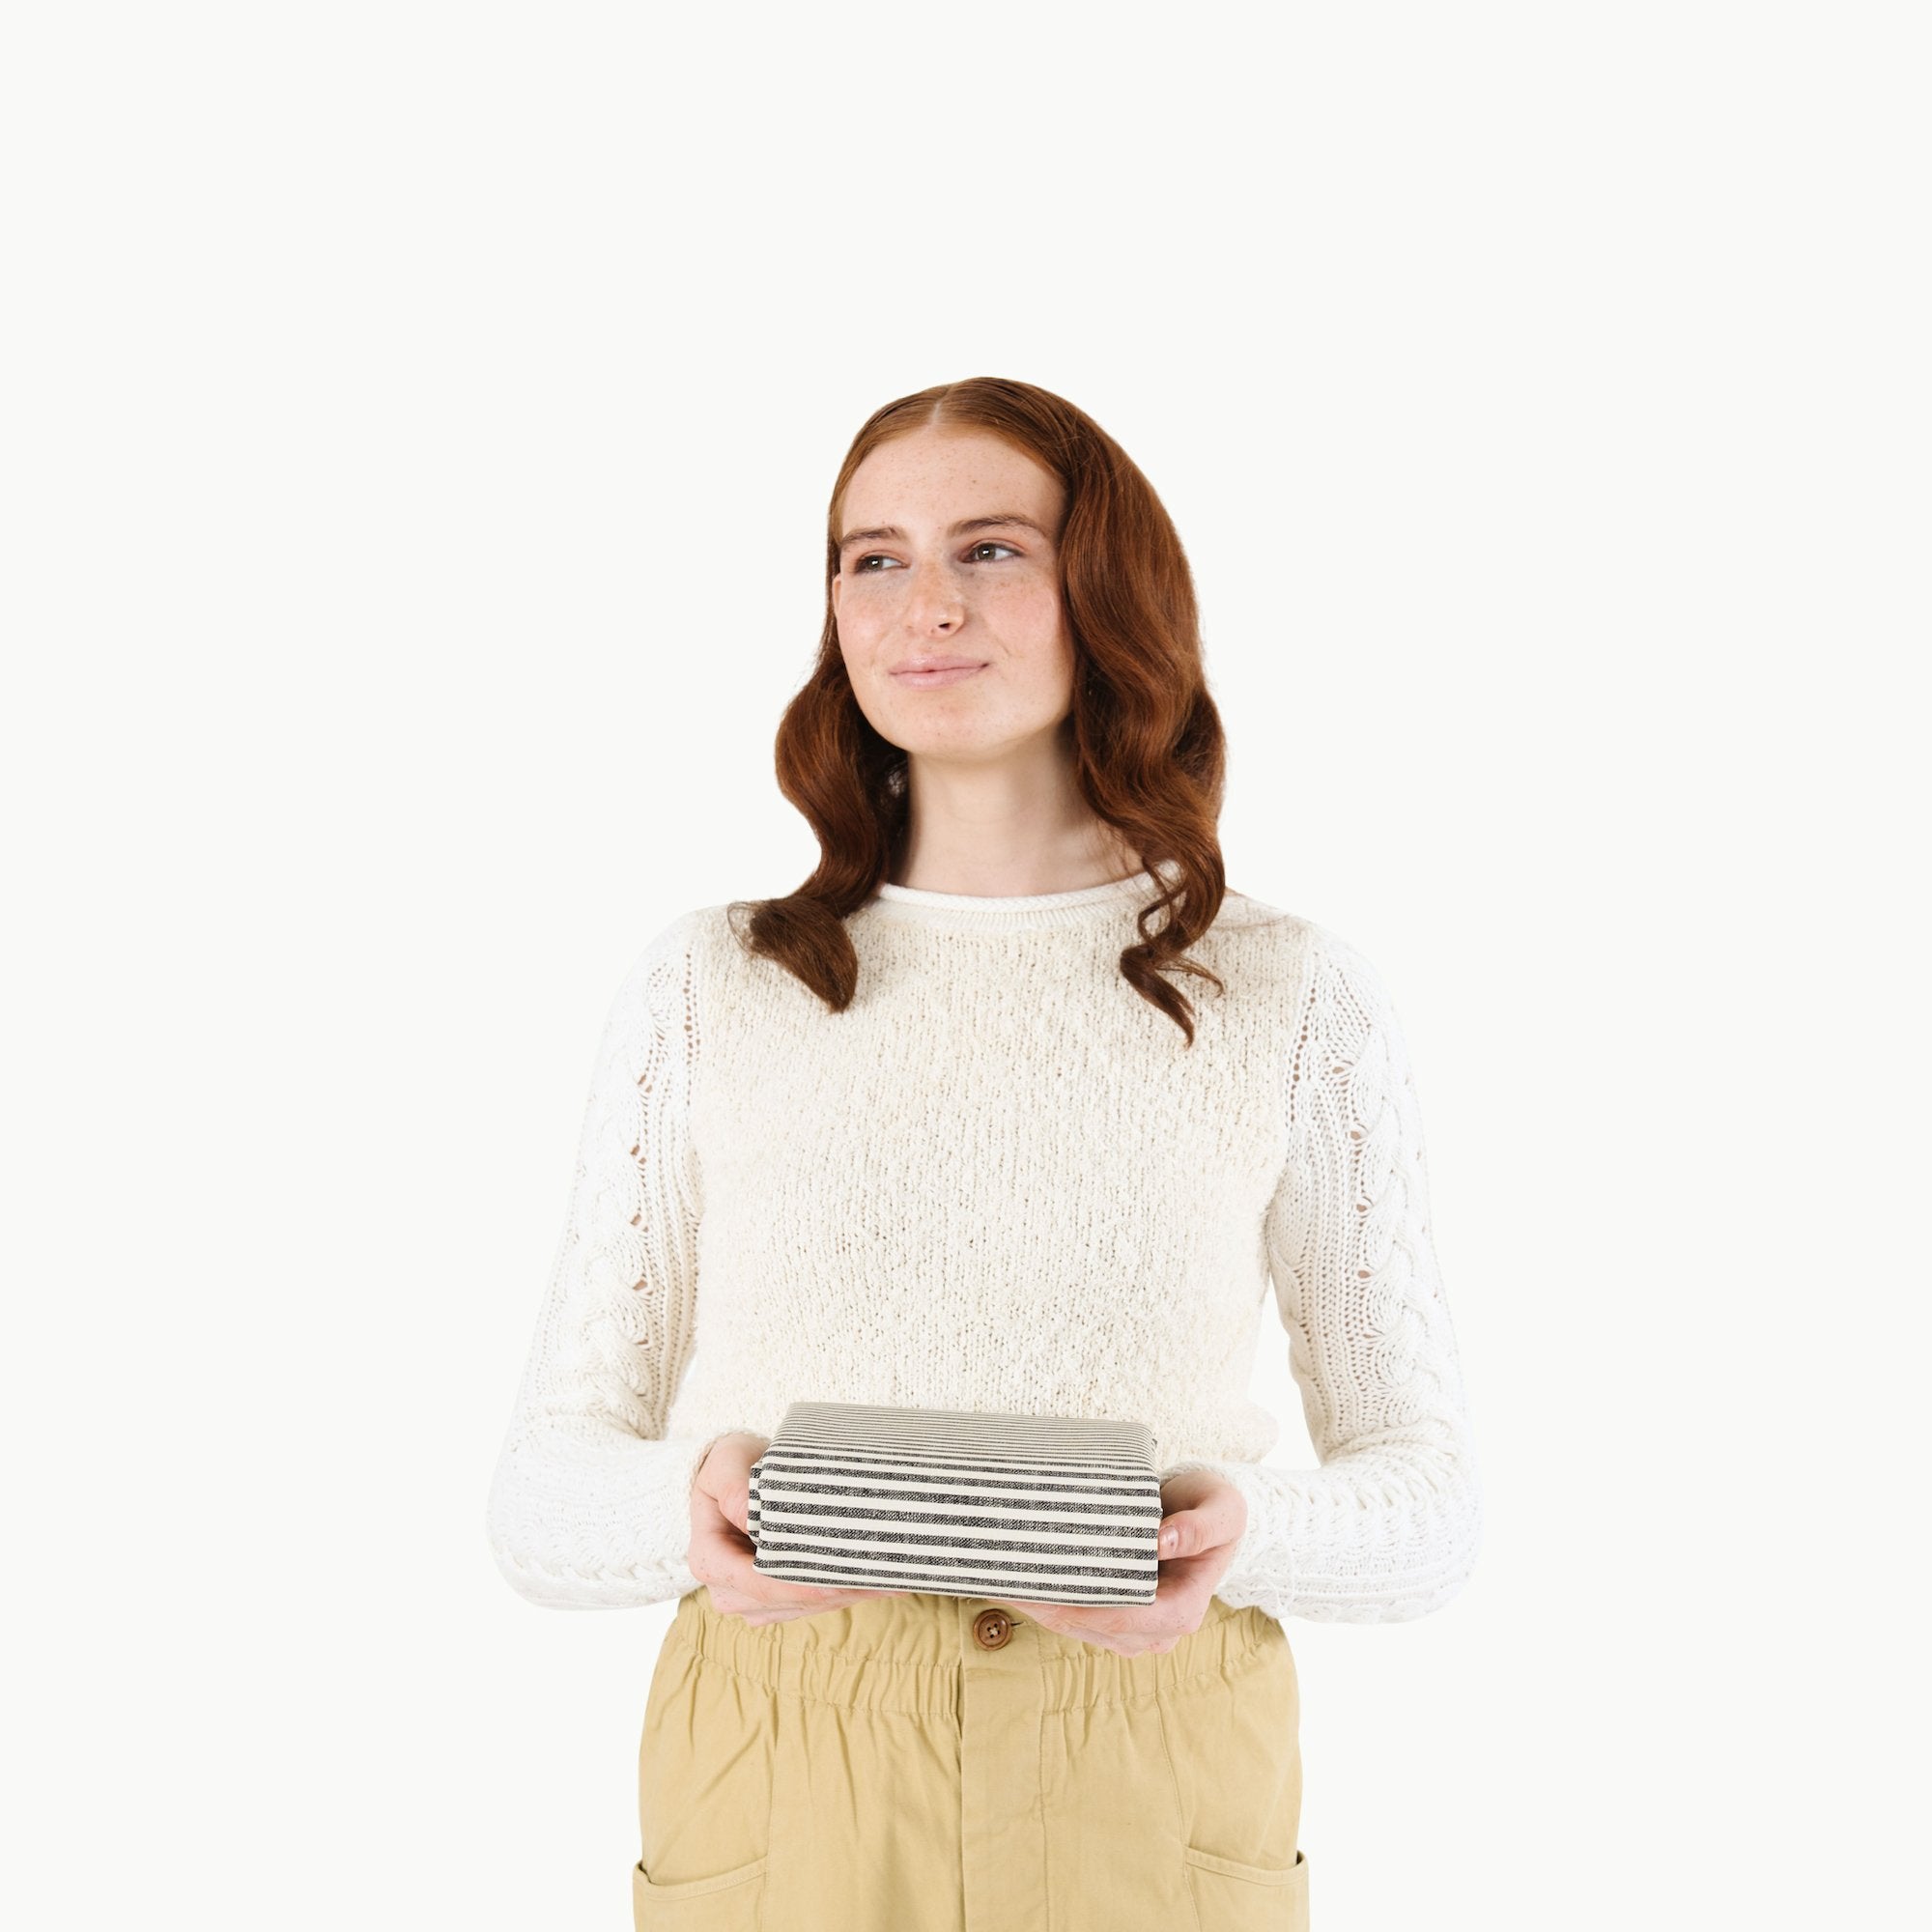 Stone Stripe@Woman holding a folded Stone Stripe Mini Mat